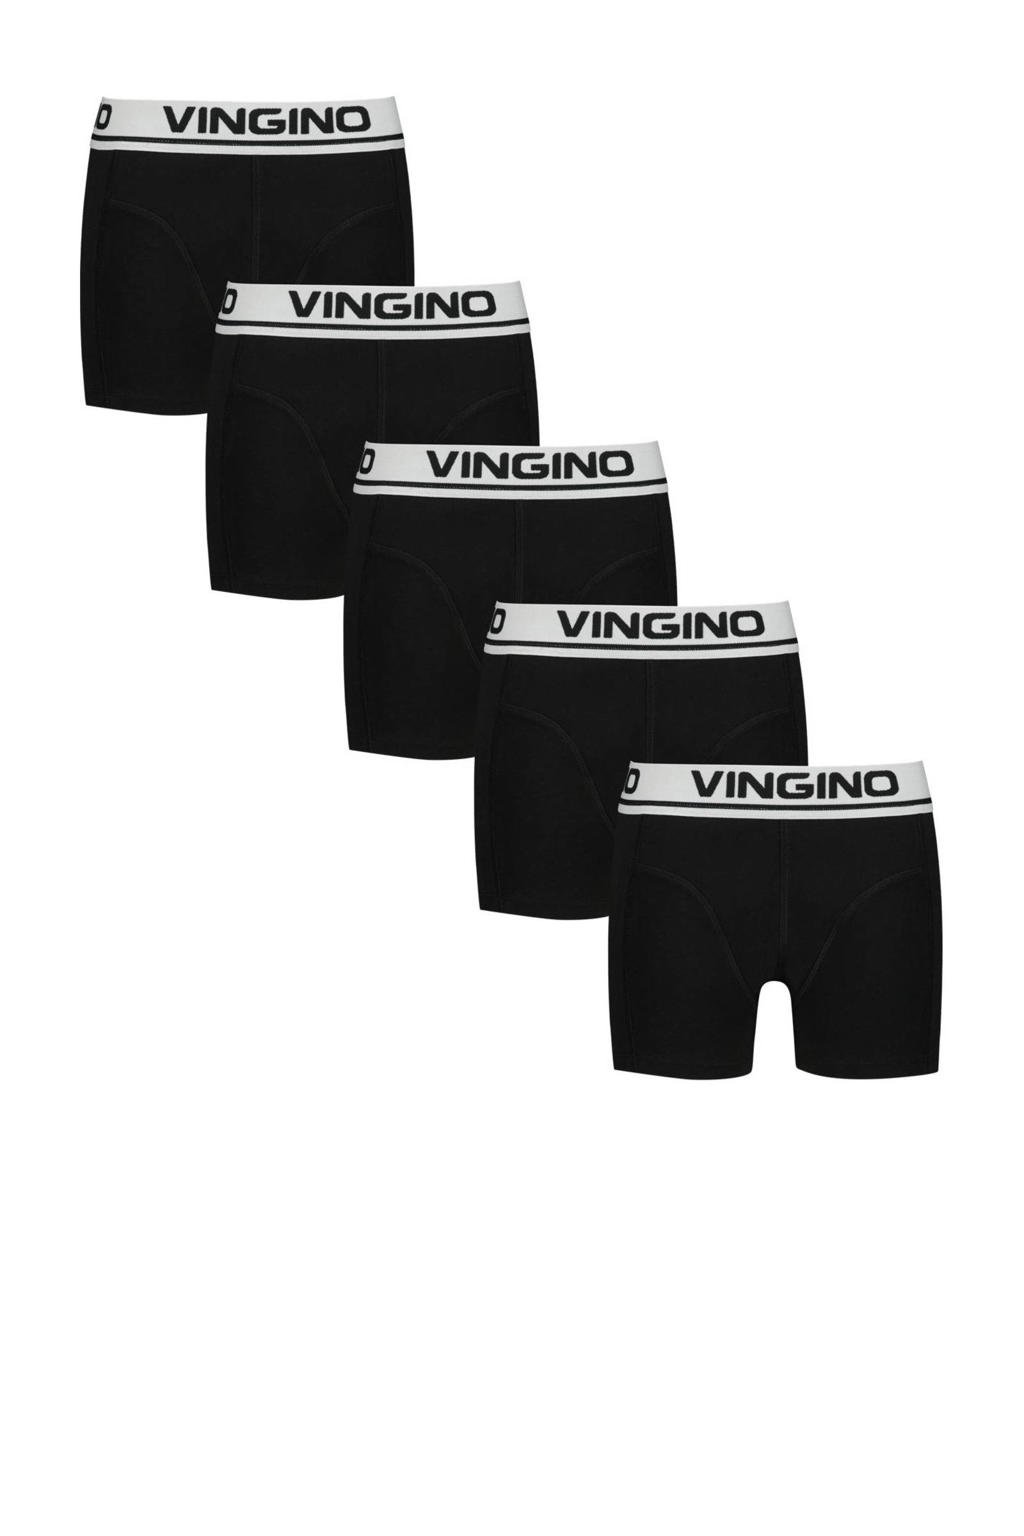 Vingino   boxershort - set van 5 zwart